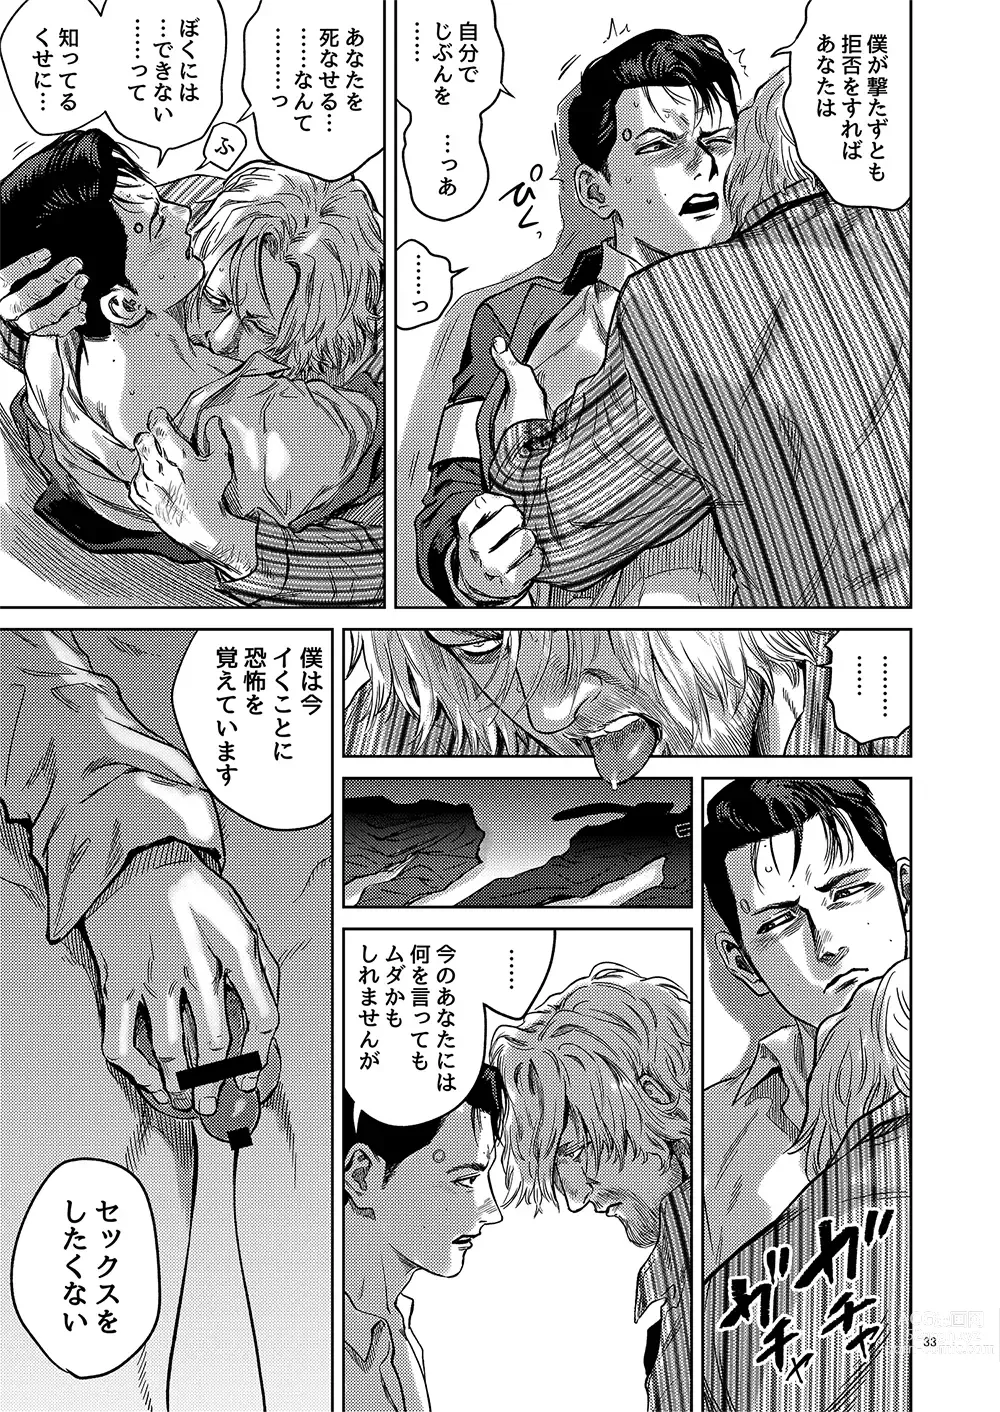 Page 32 of doujinshi Distortion